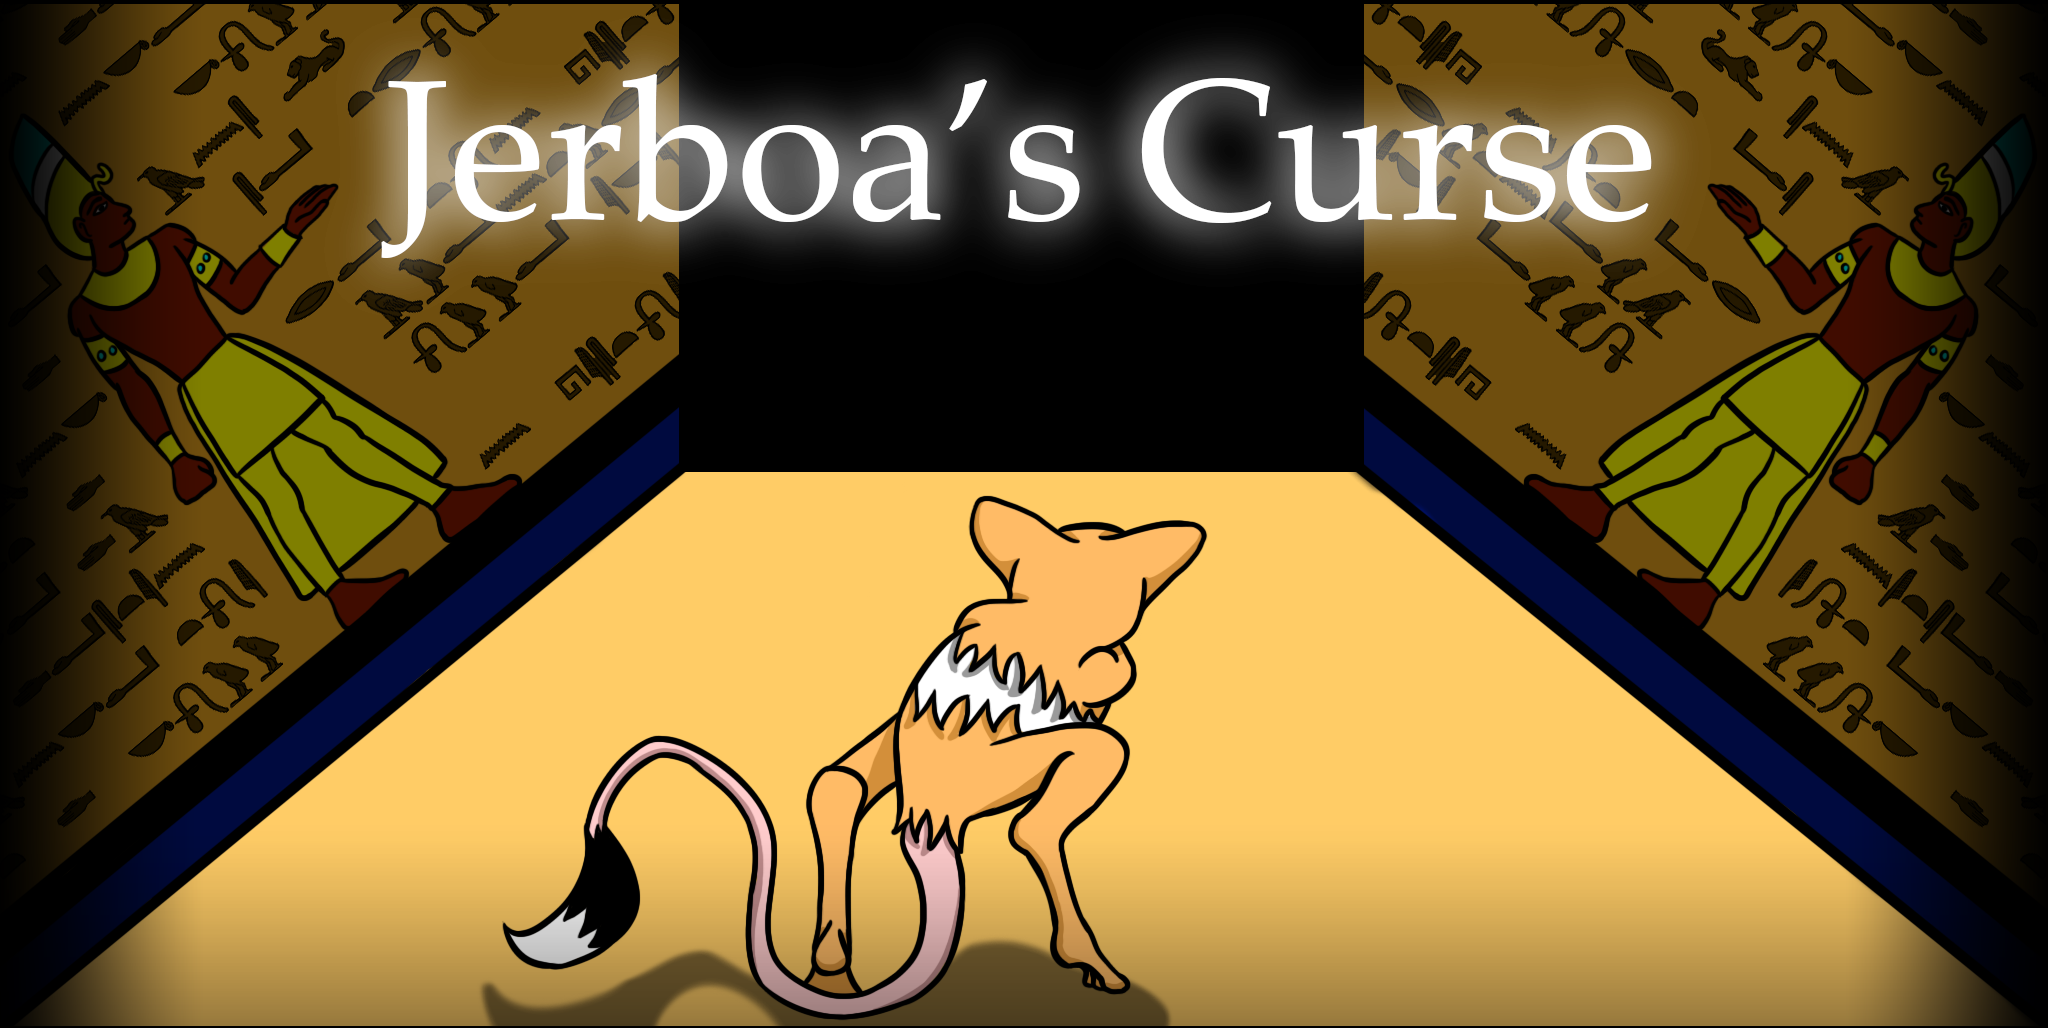 Jerboa's Curse